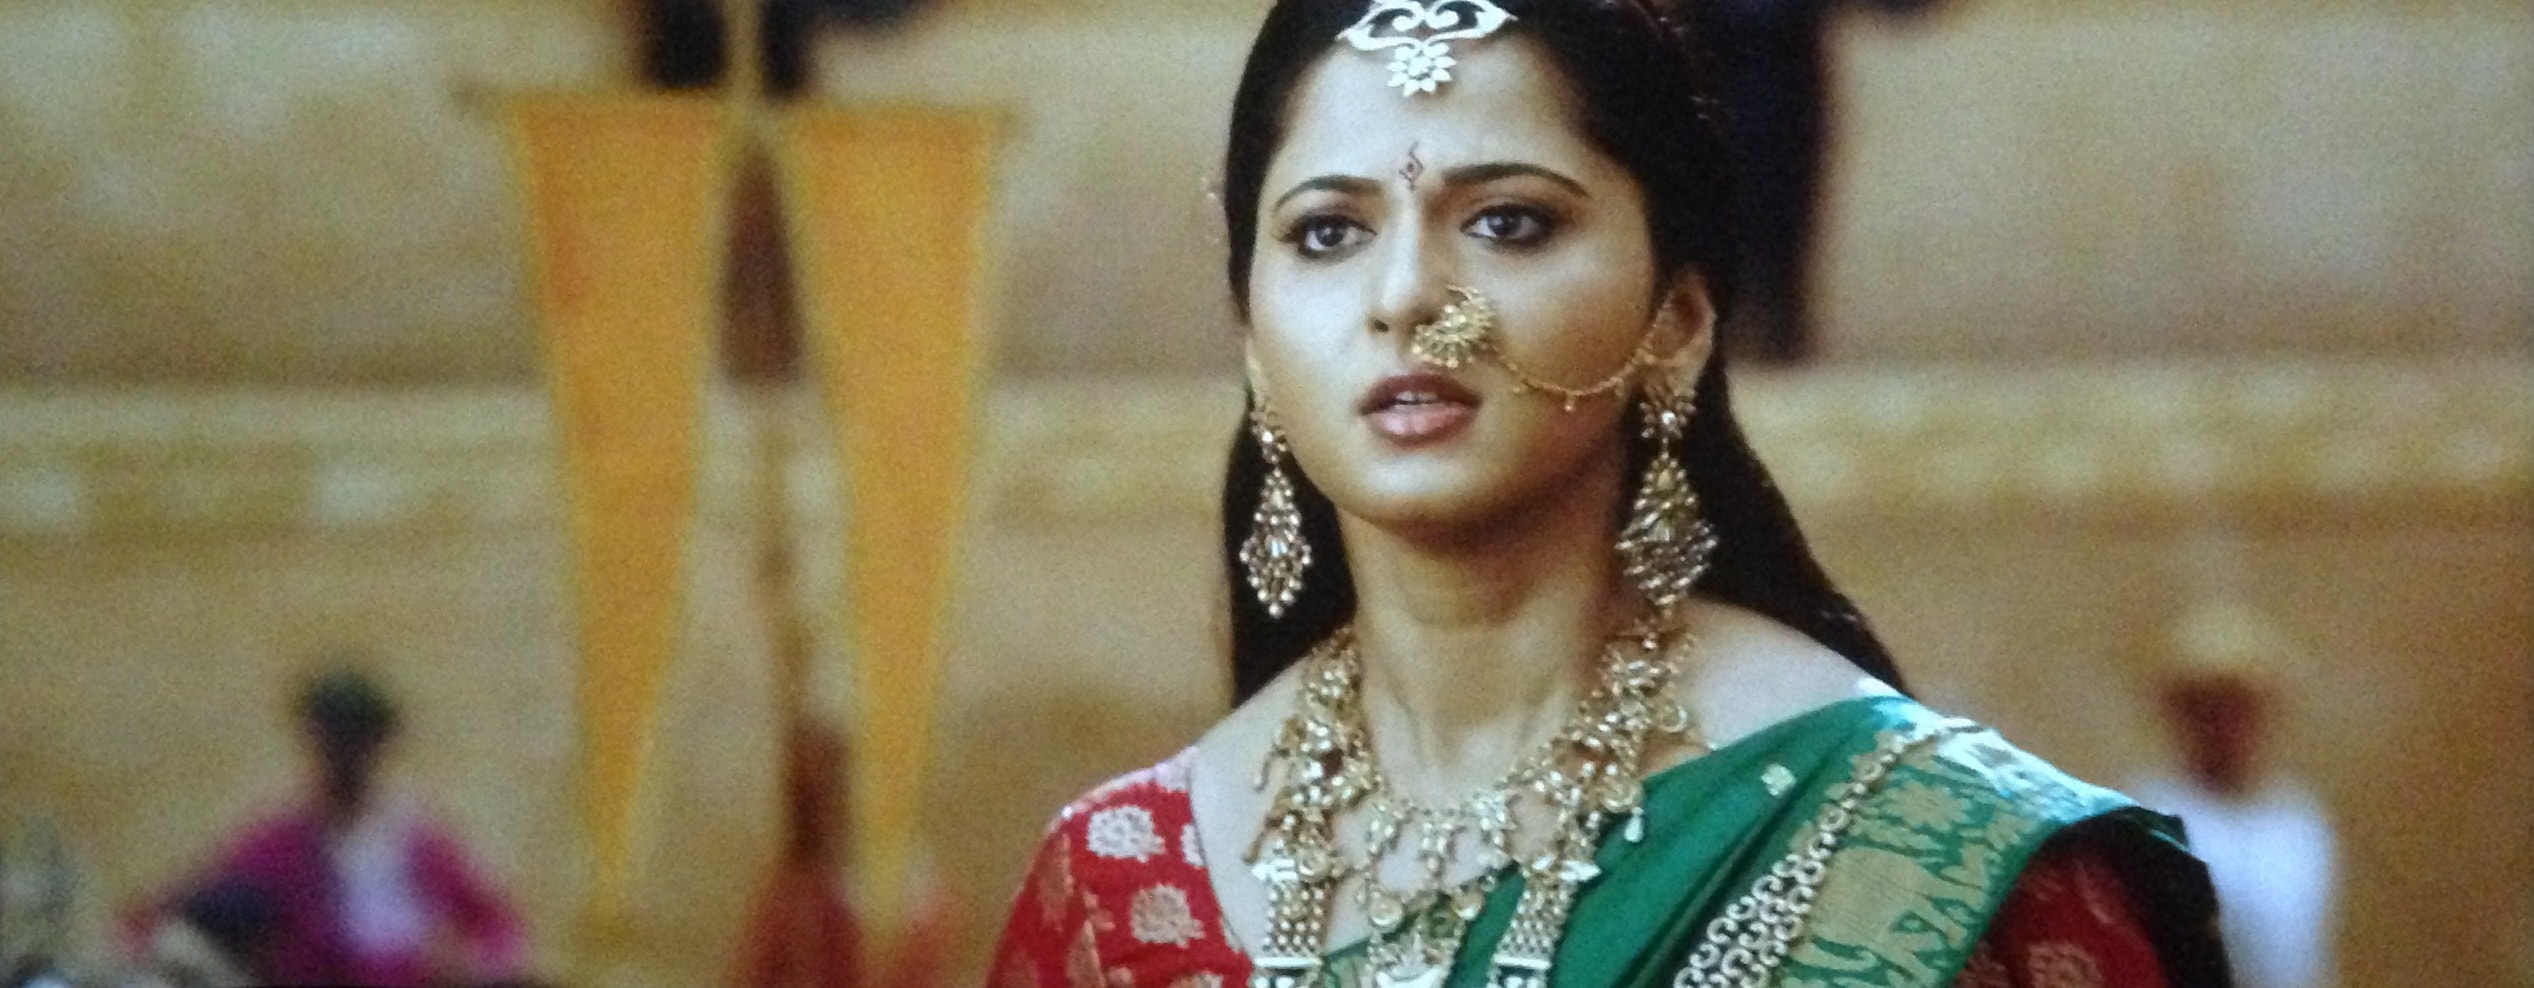 Anushka Shetty in bahubali 2 The conclusion, Anushka jewelry in bahubali 2 